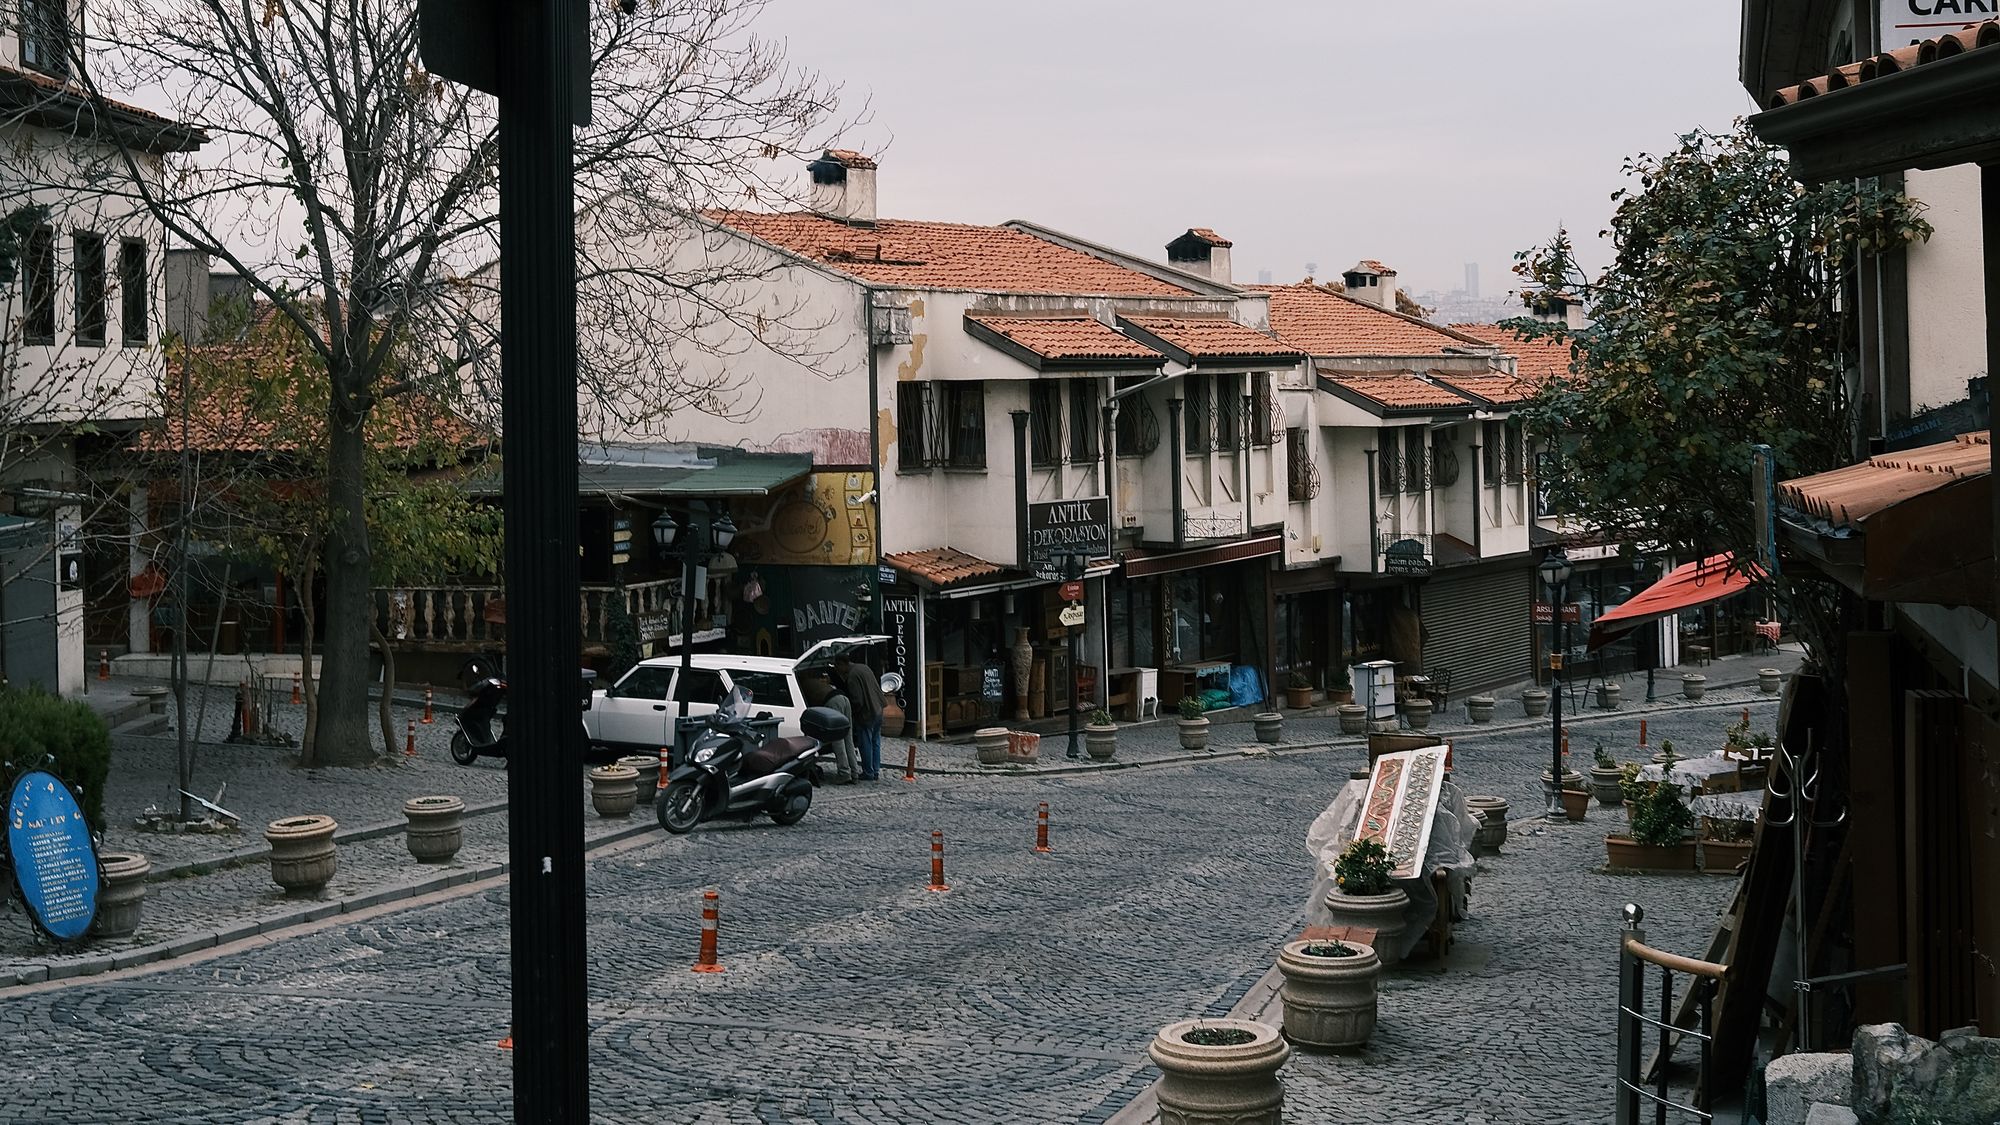 Ulus, the old town of Ankara